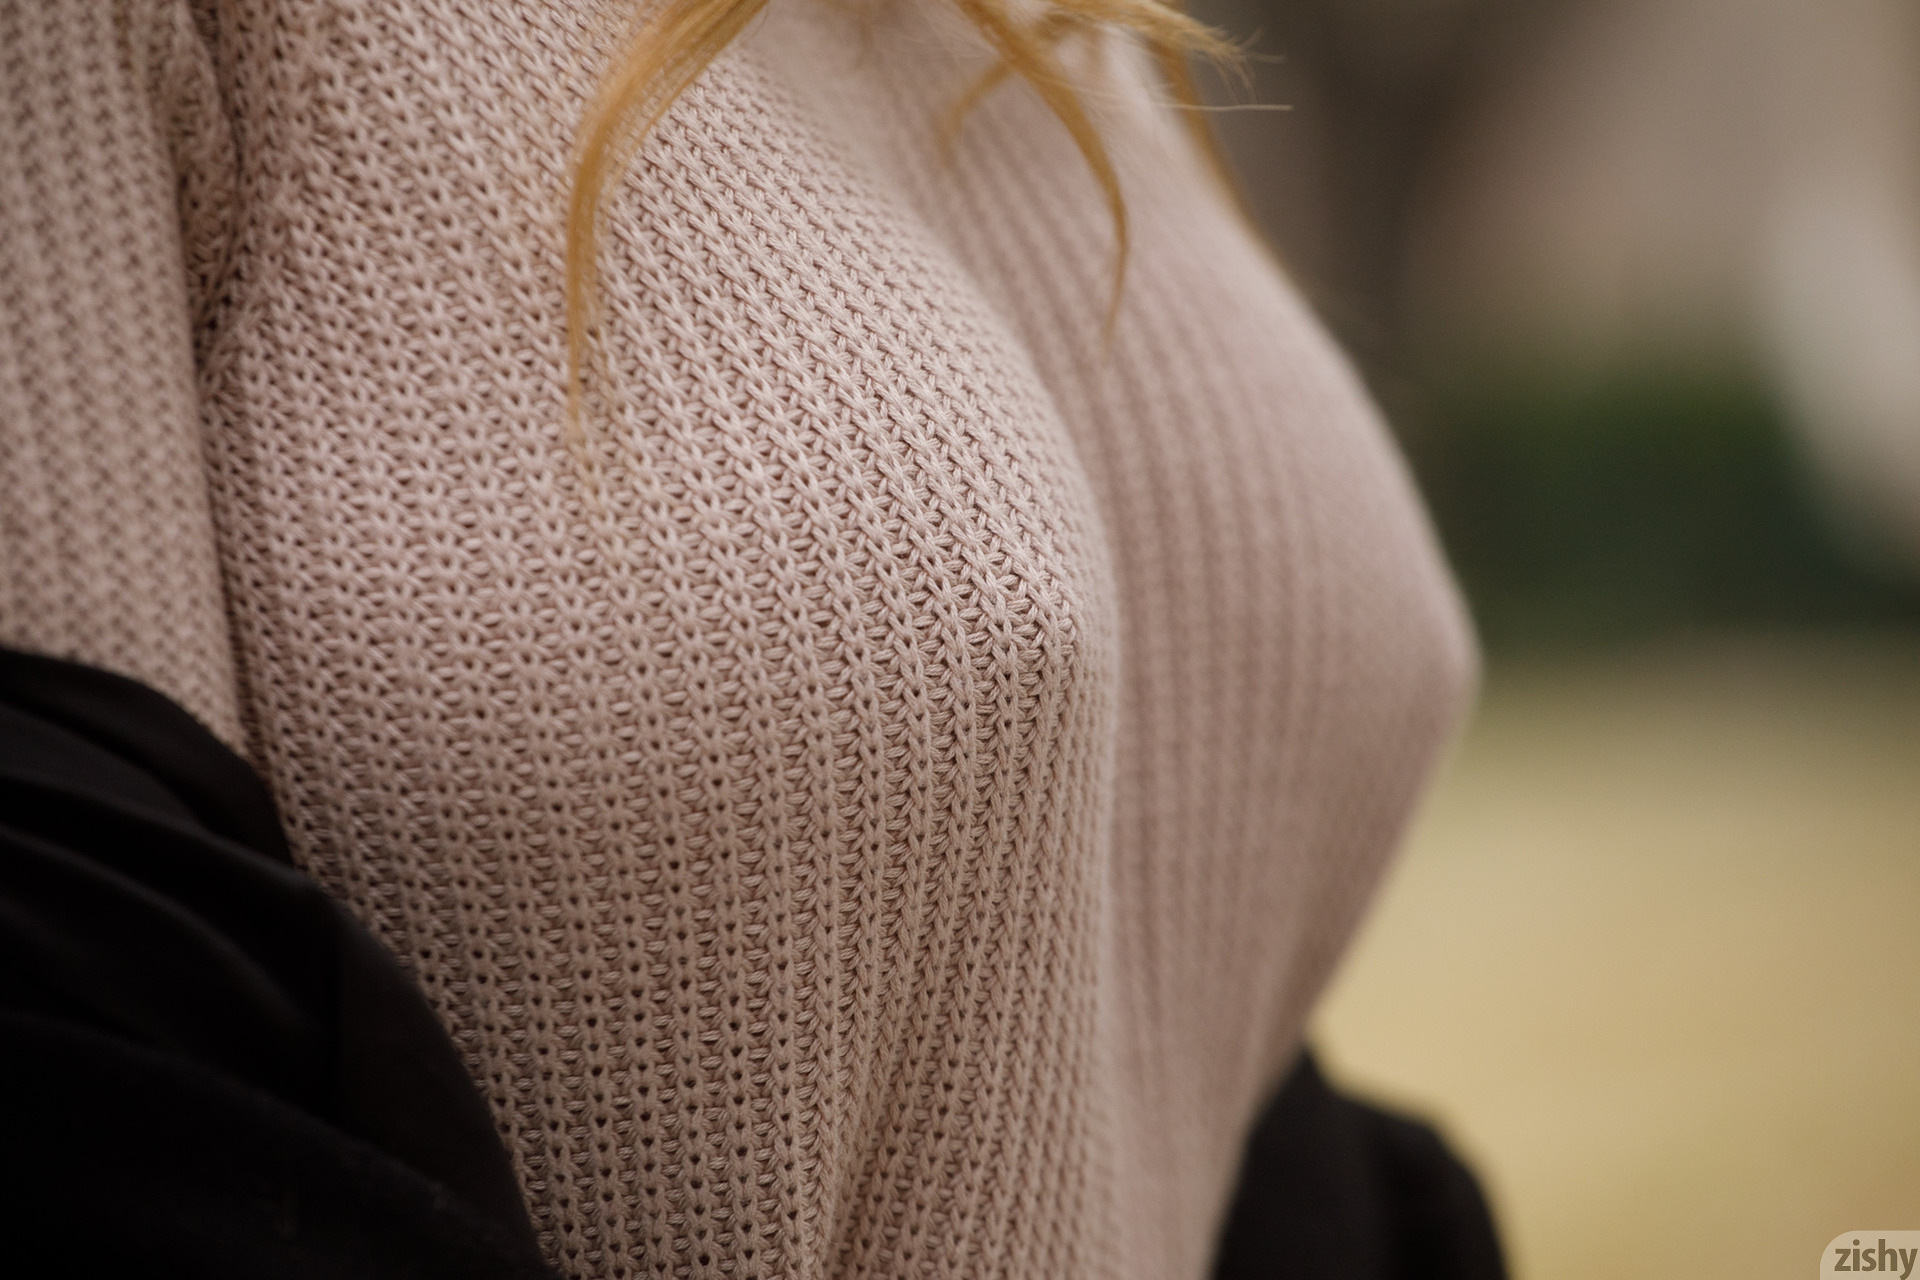 People 1920x1280 women model hard nipples white sweater Zishy blonde sweater nipple bulge knit fabric